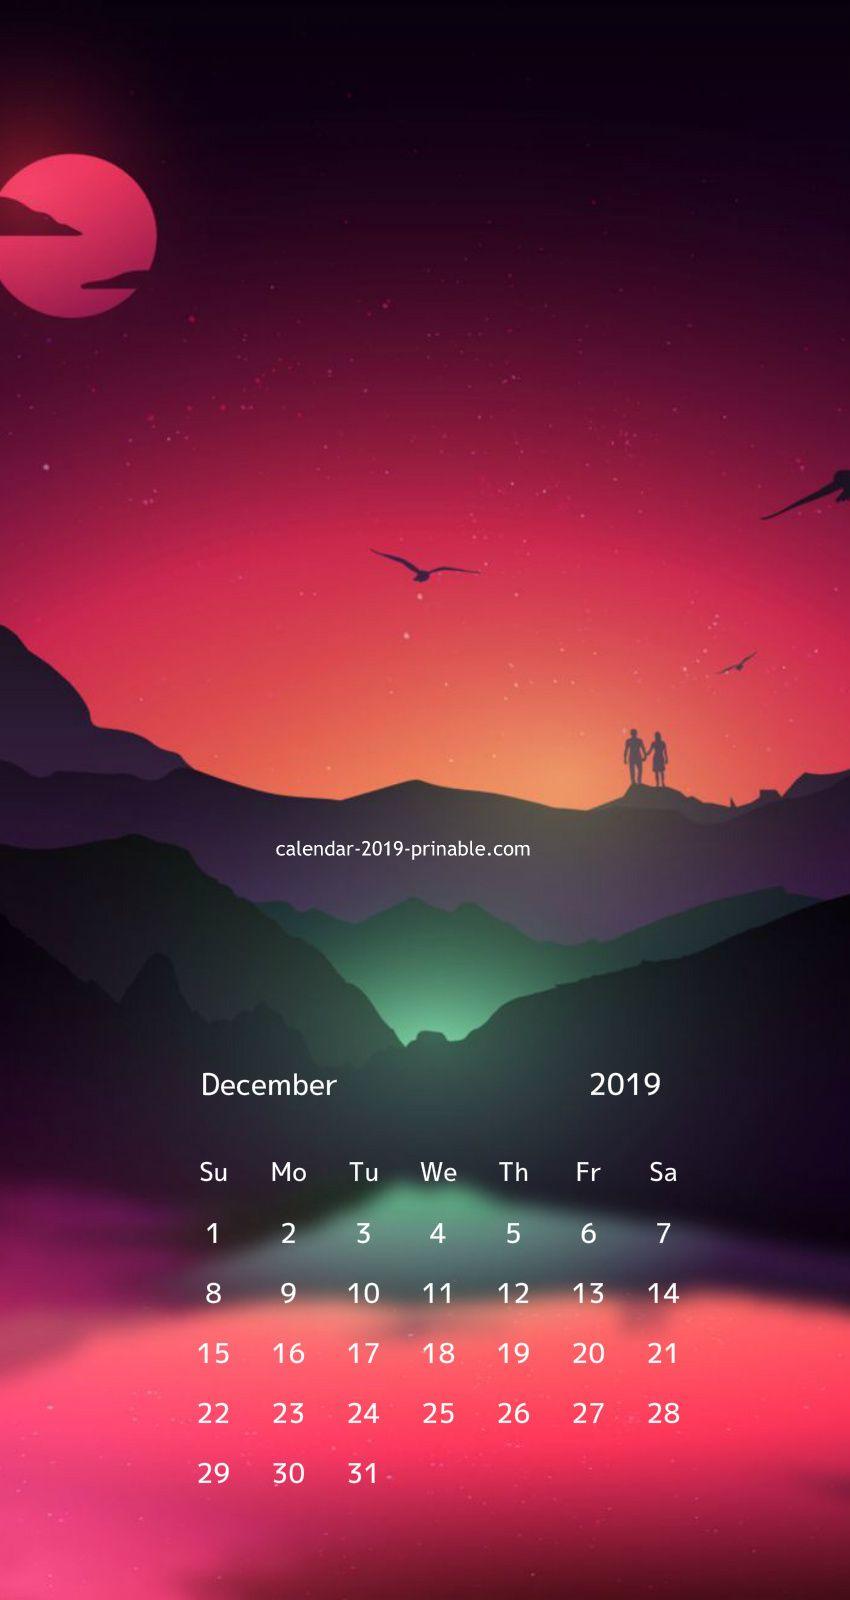 december 2019 iphone calendar wallpaper Calendars in 2019